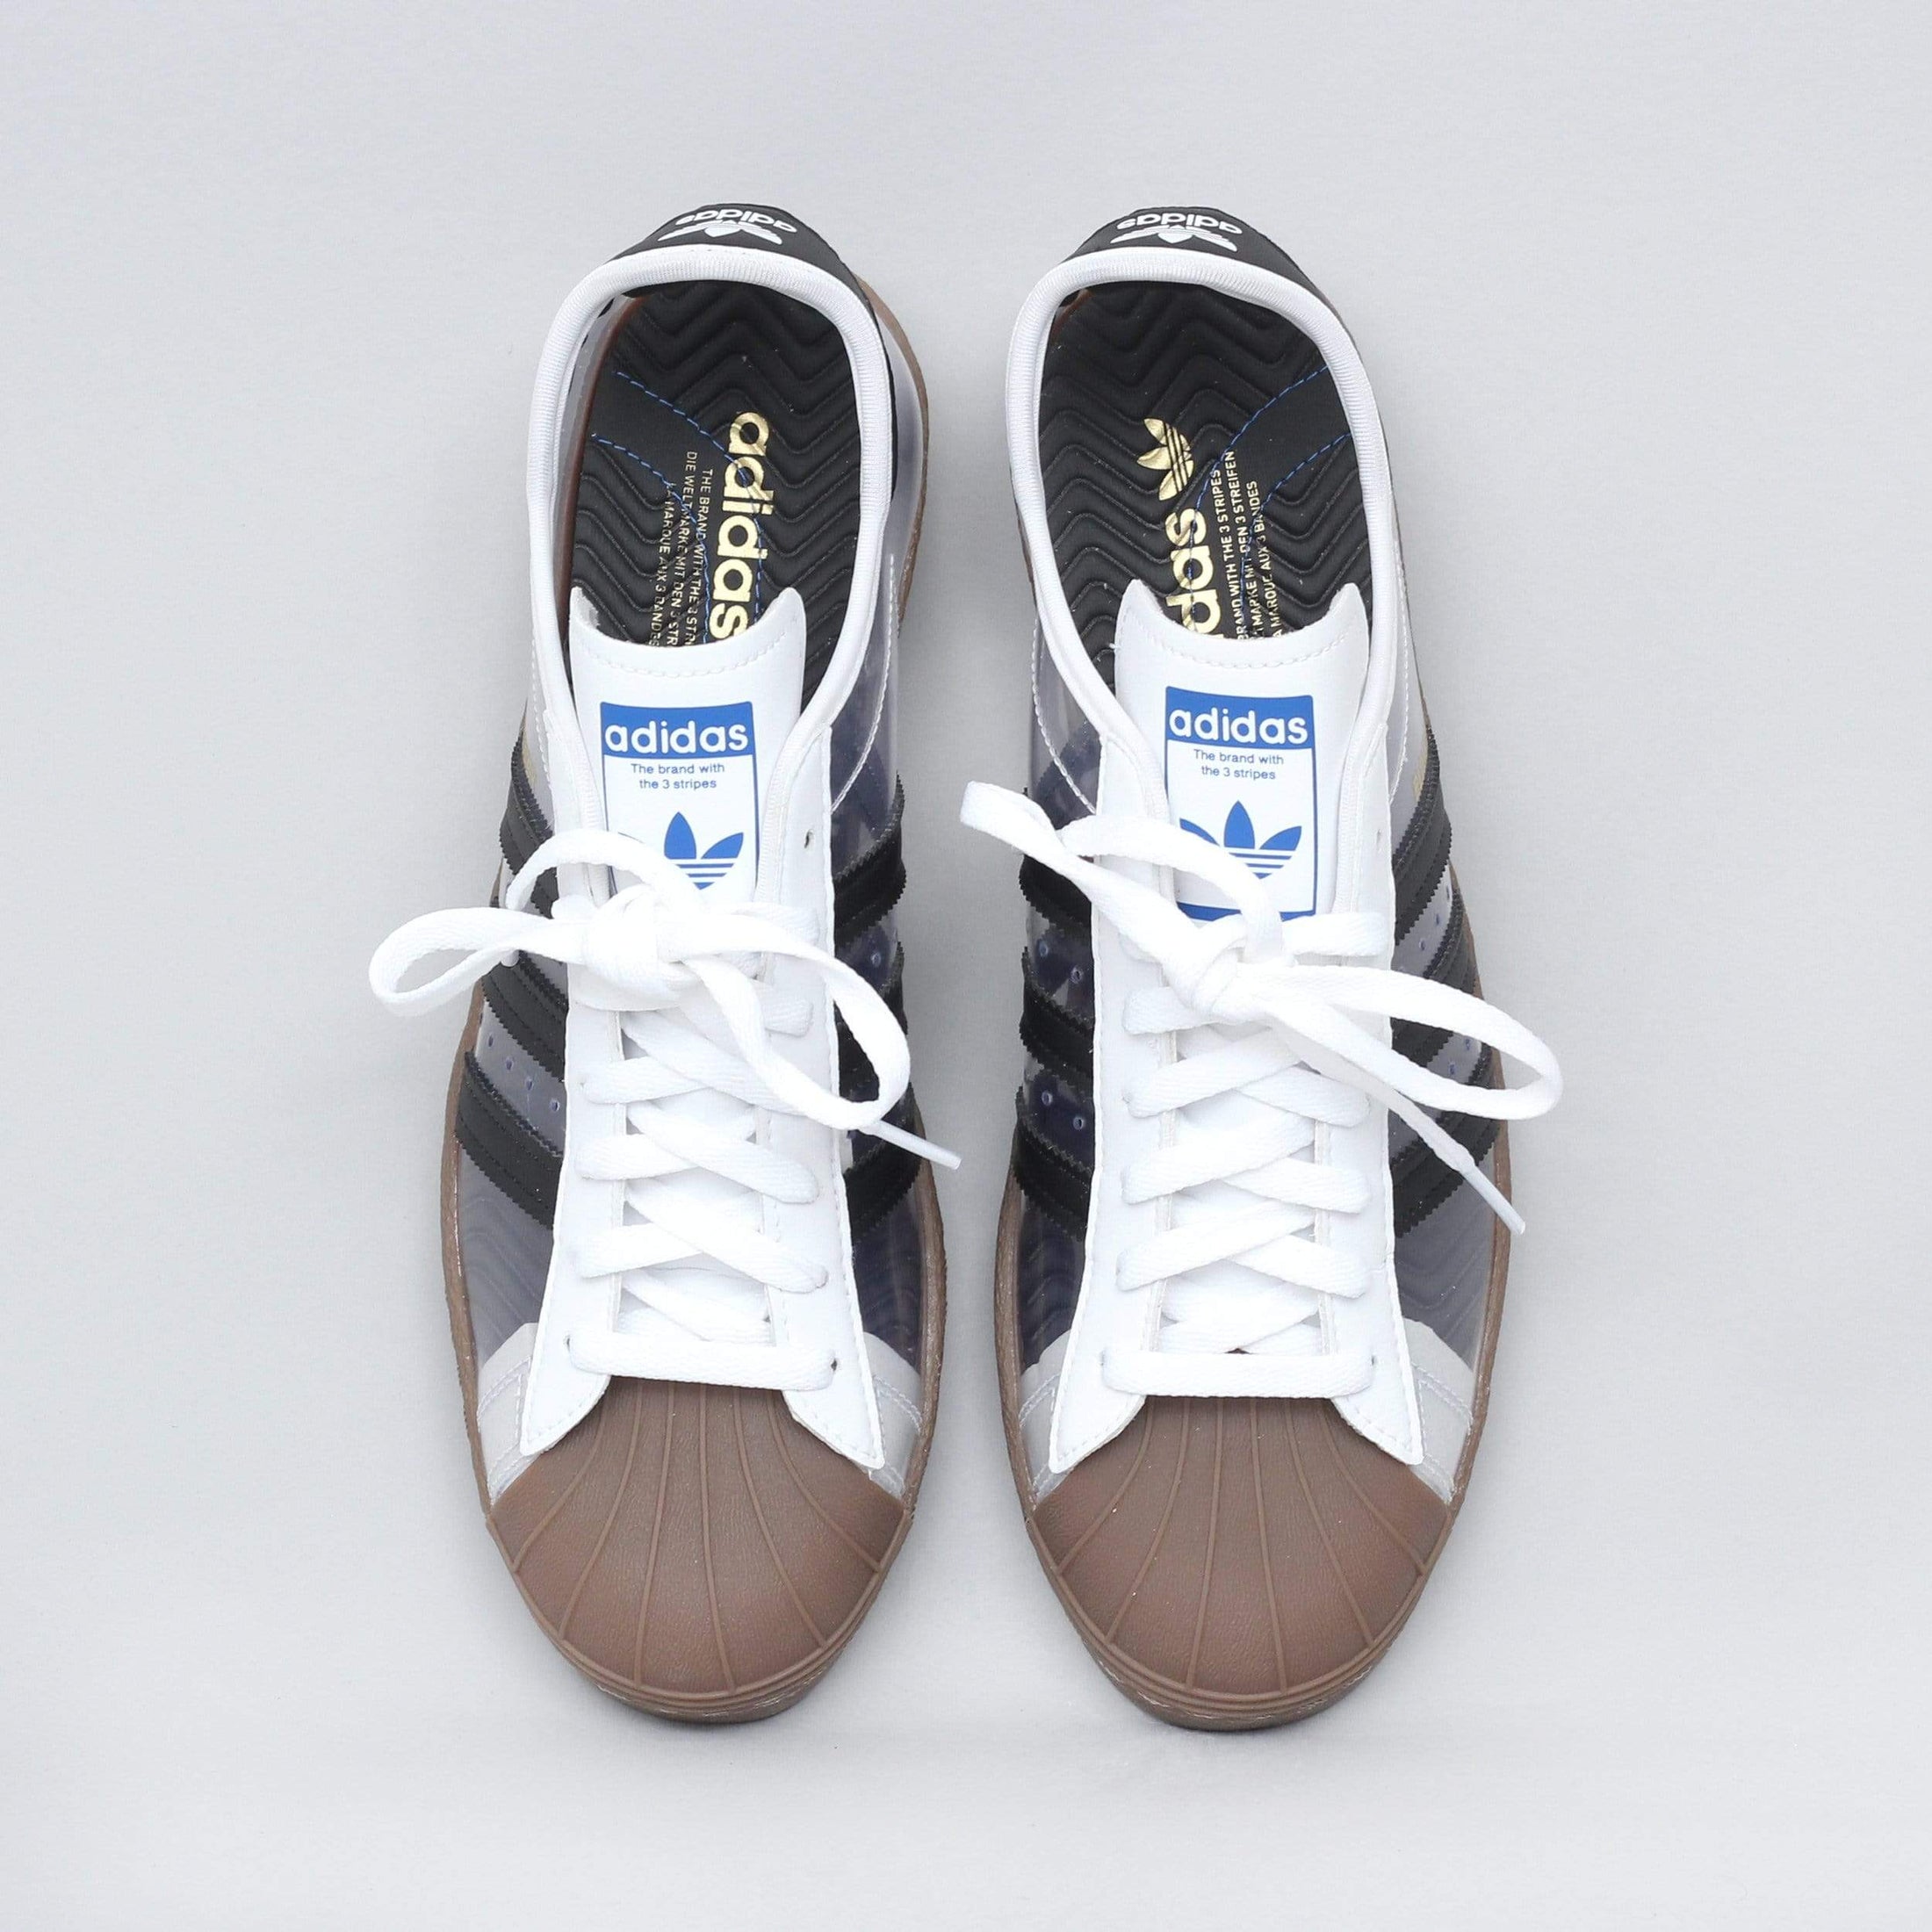 adidas Superstar 80s x Blondey Shoes Footwear White / Core Black / Gum